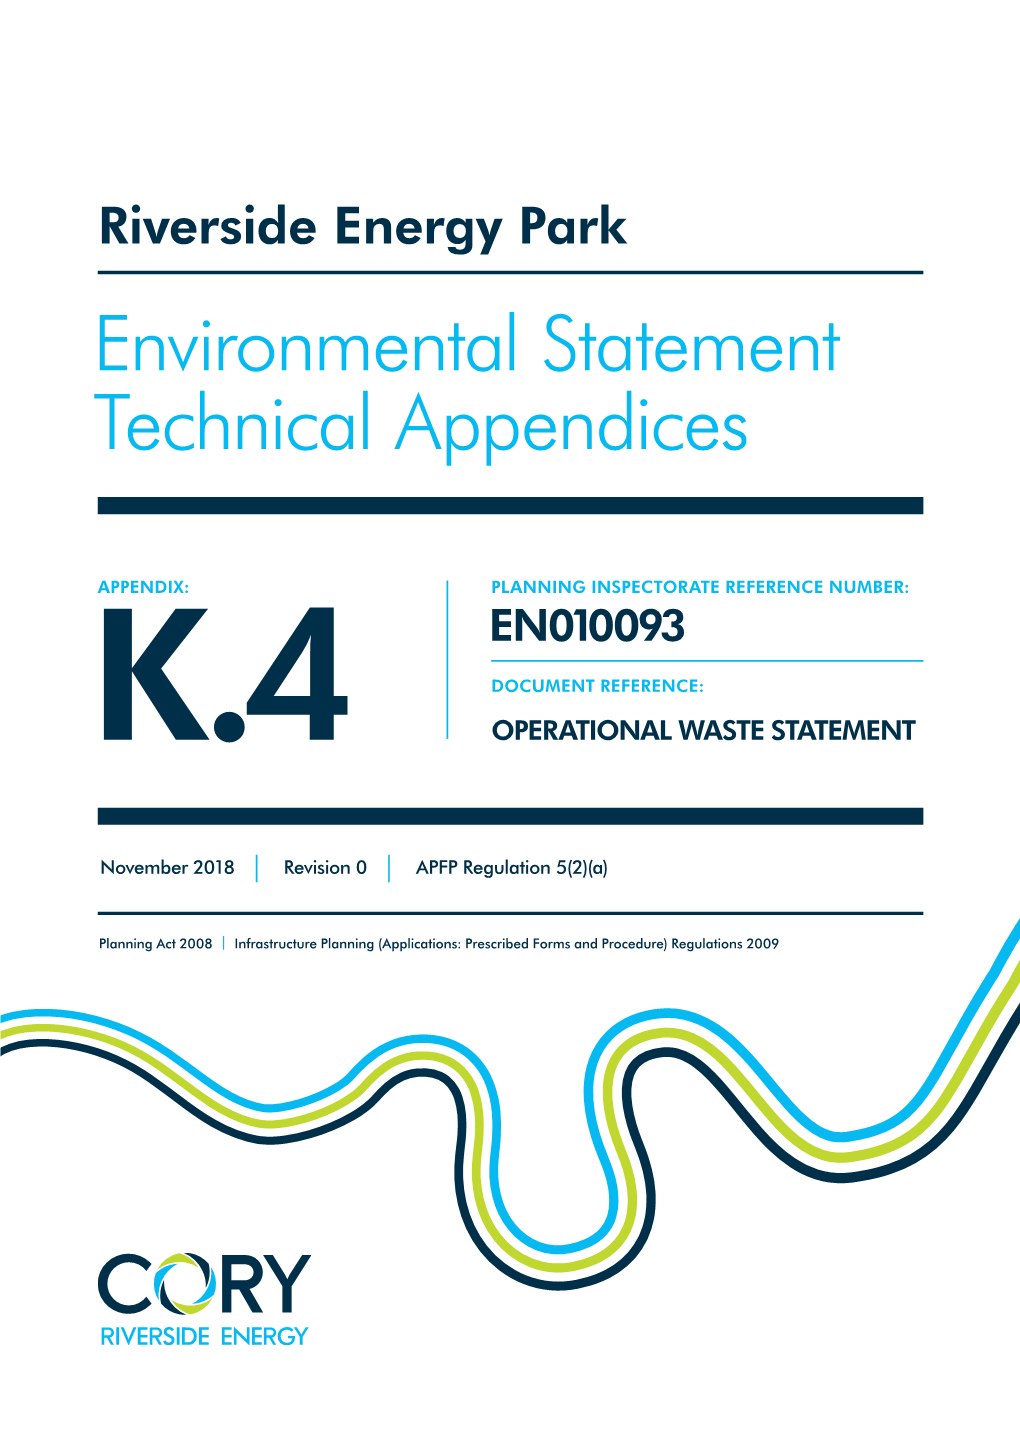 Cory Riverside Energy) (“Cory” Or “The Applicant”) by Peter Brett Associates (PBA)